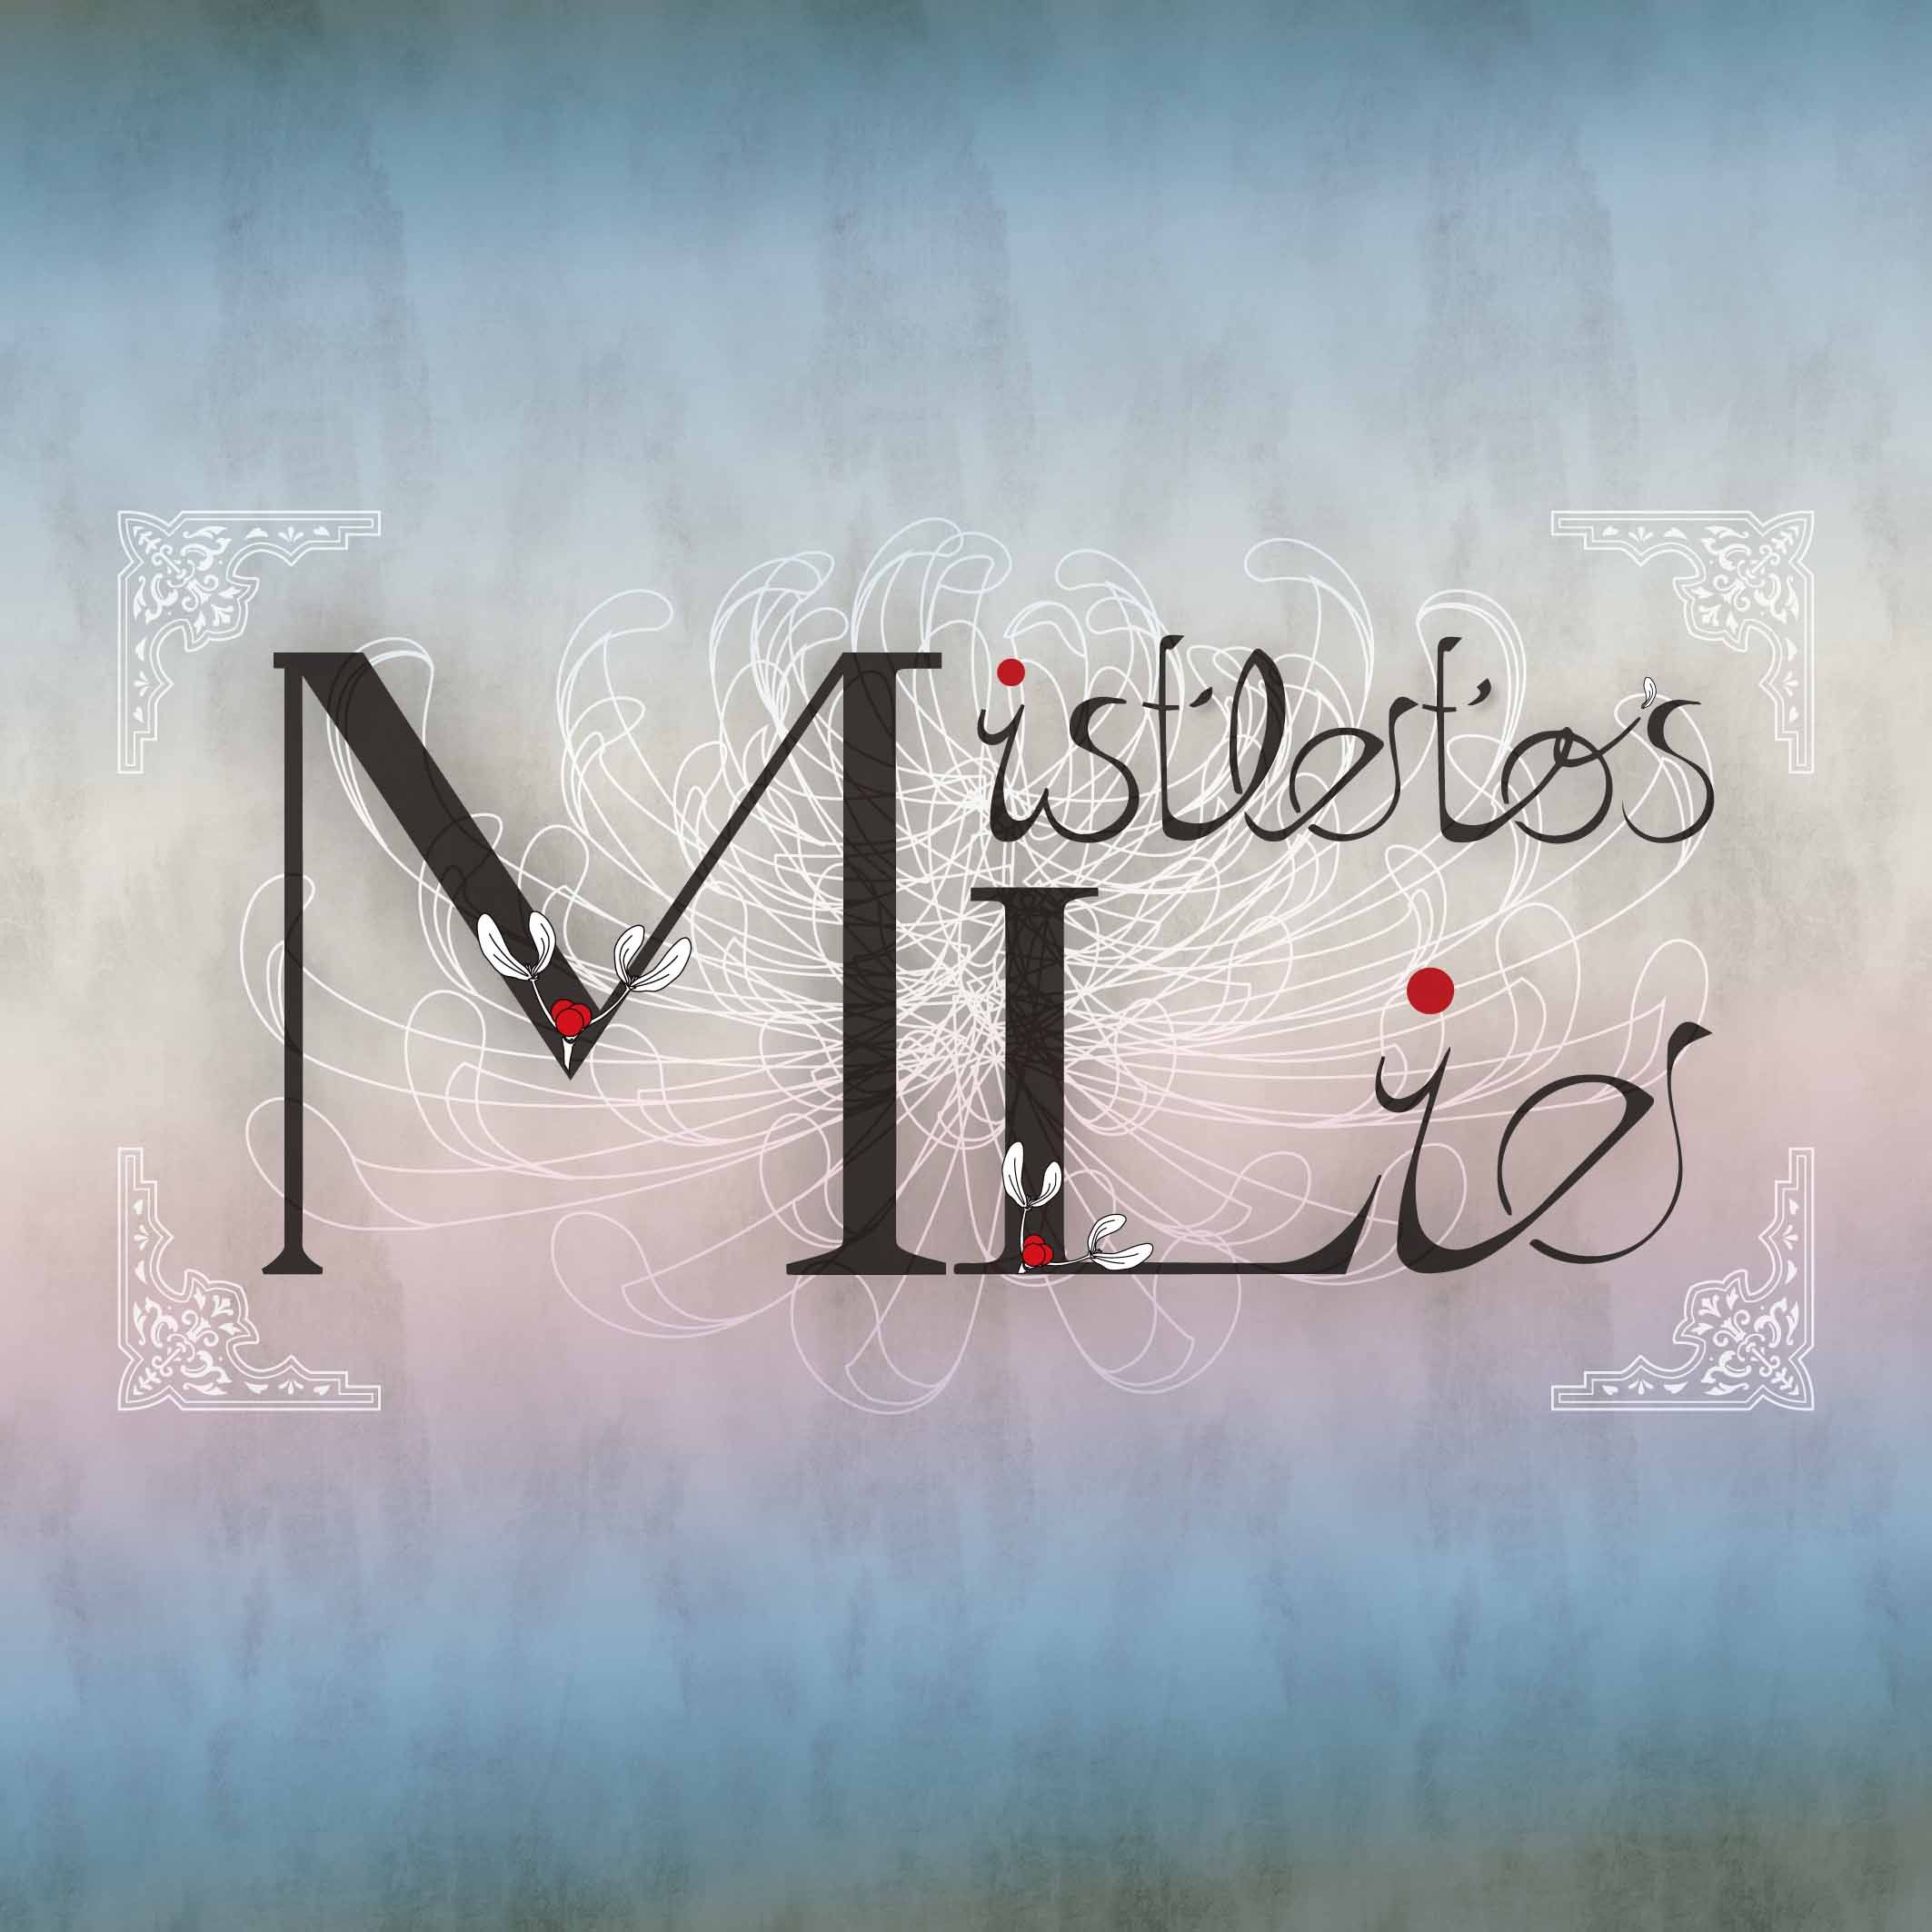 mistletoe’s lie